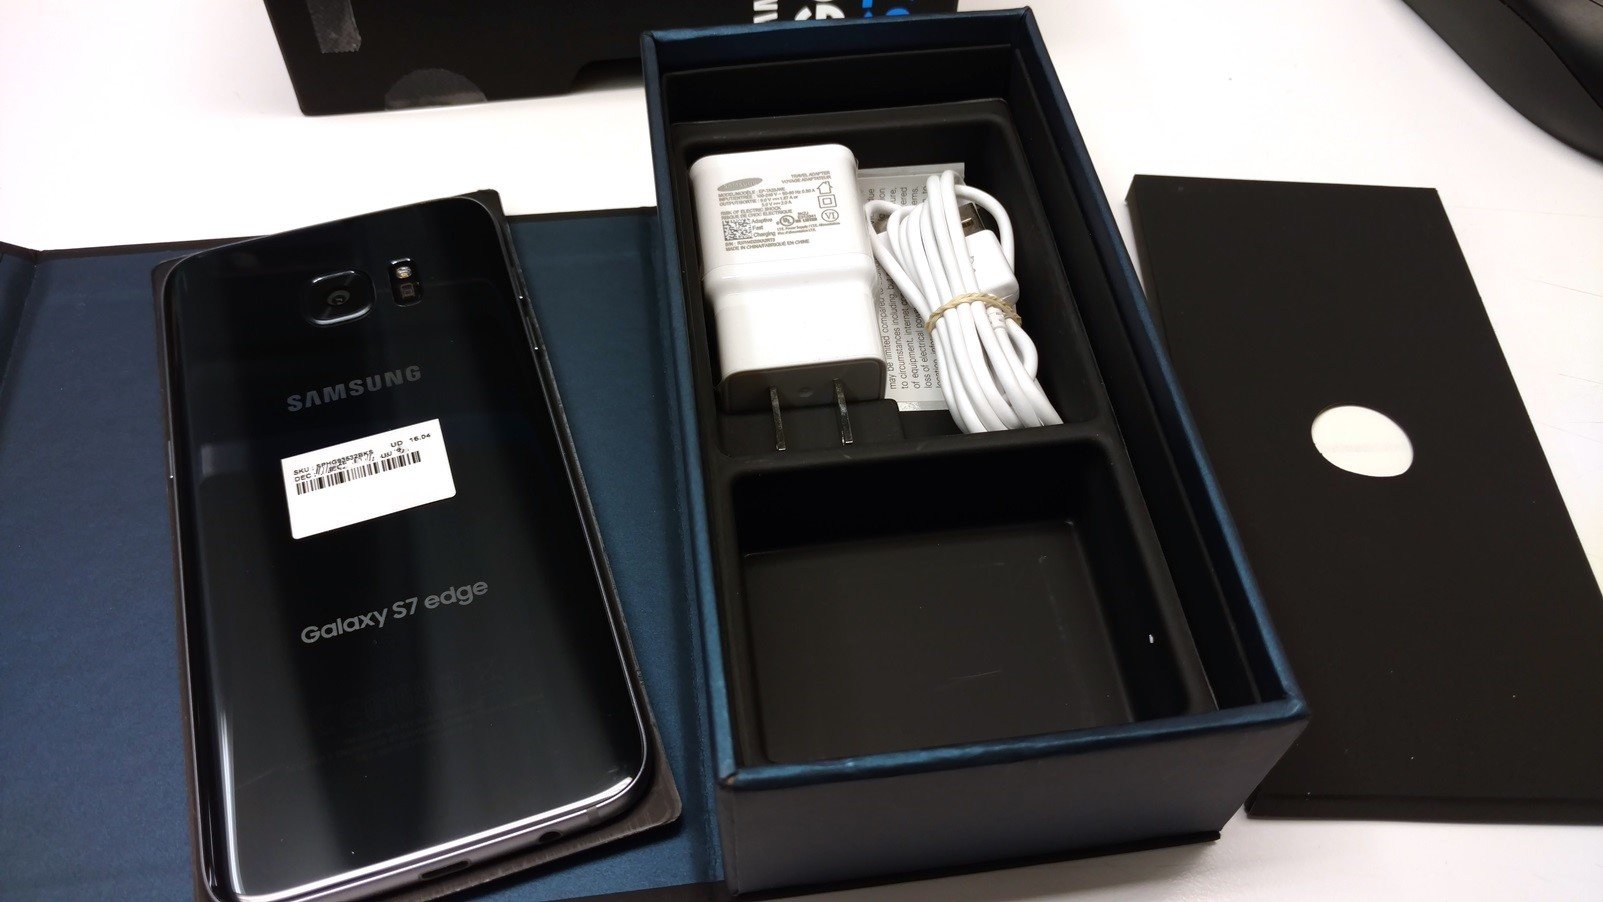 Samsung Galaxy GS7 Edge, Black 32GB (Sprint)